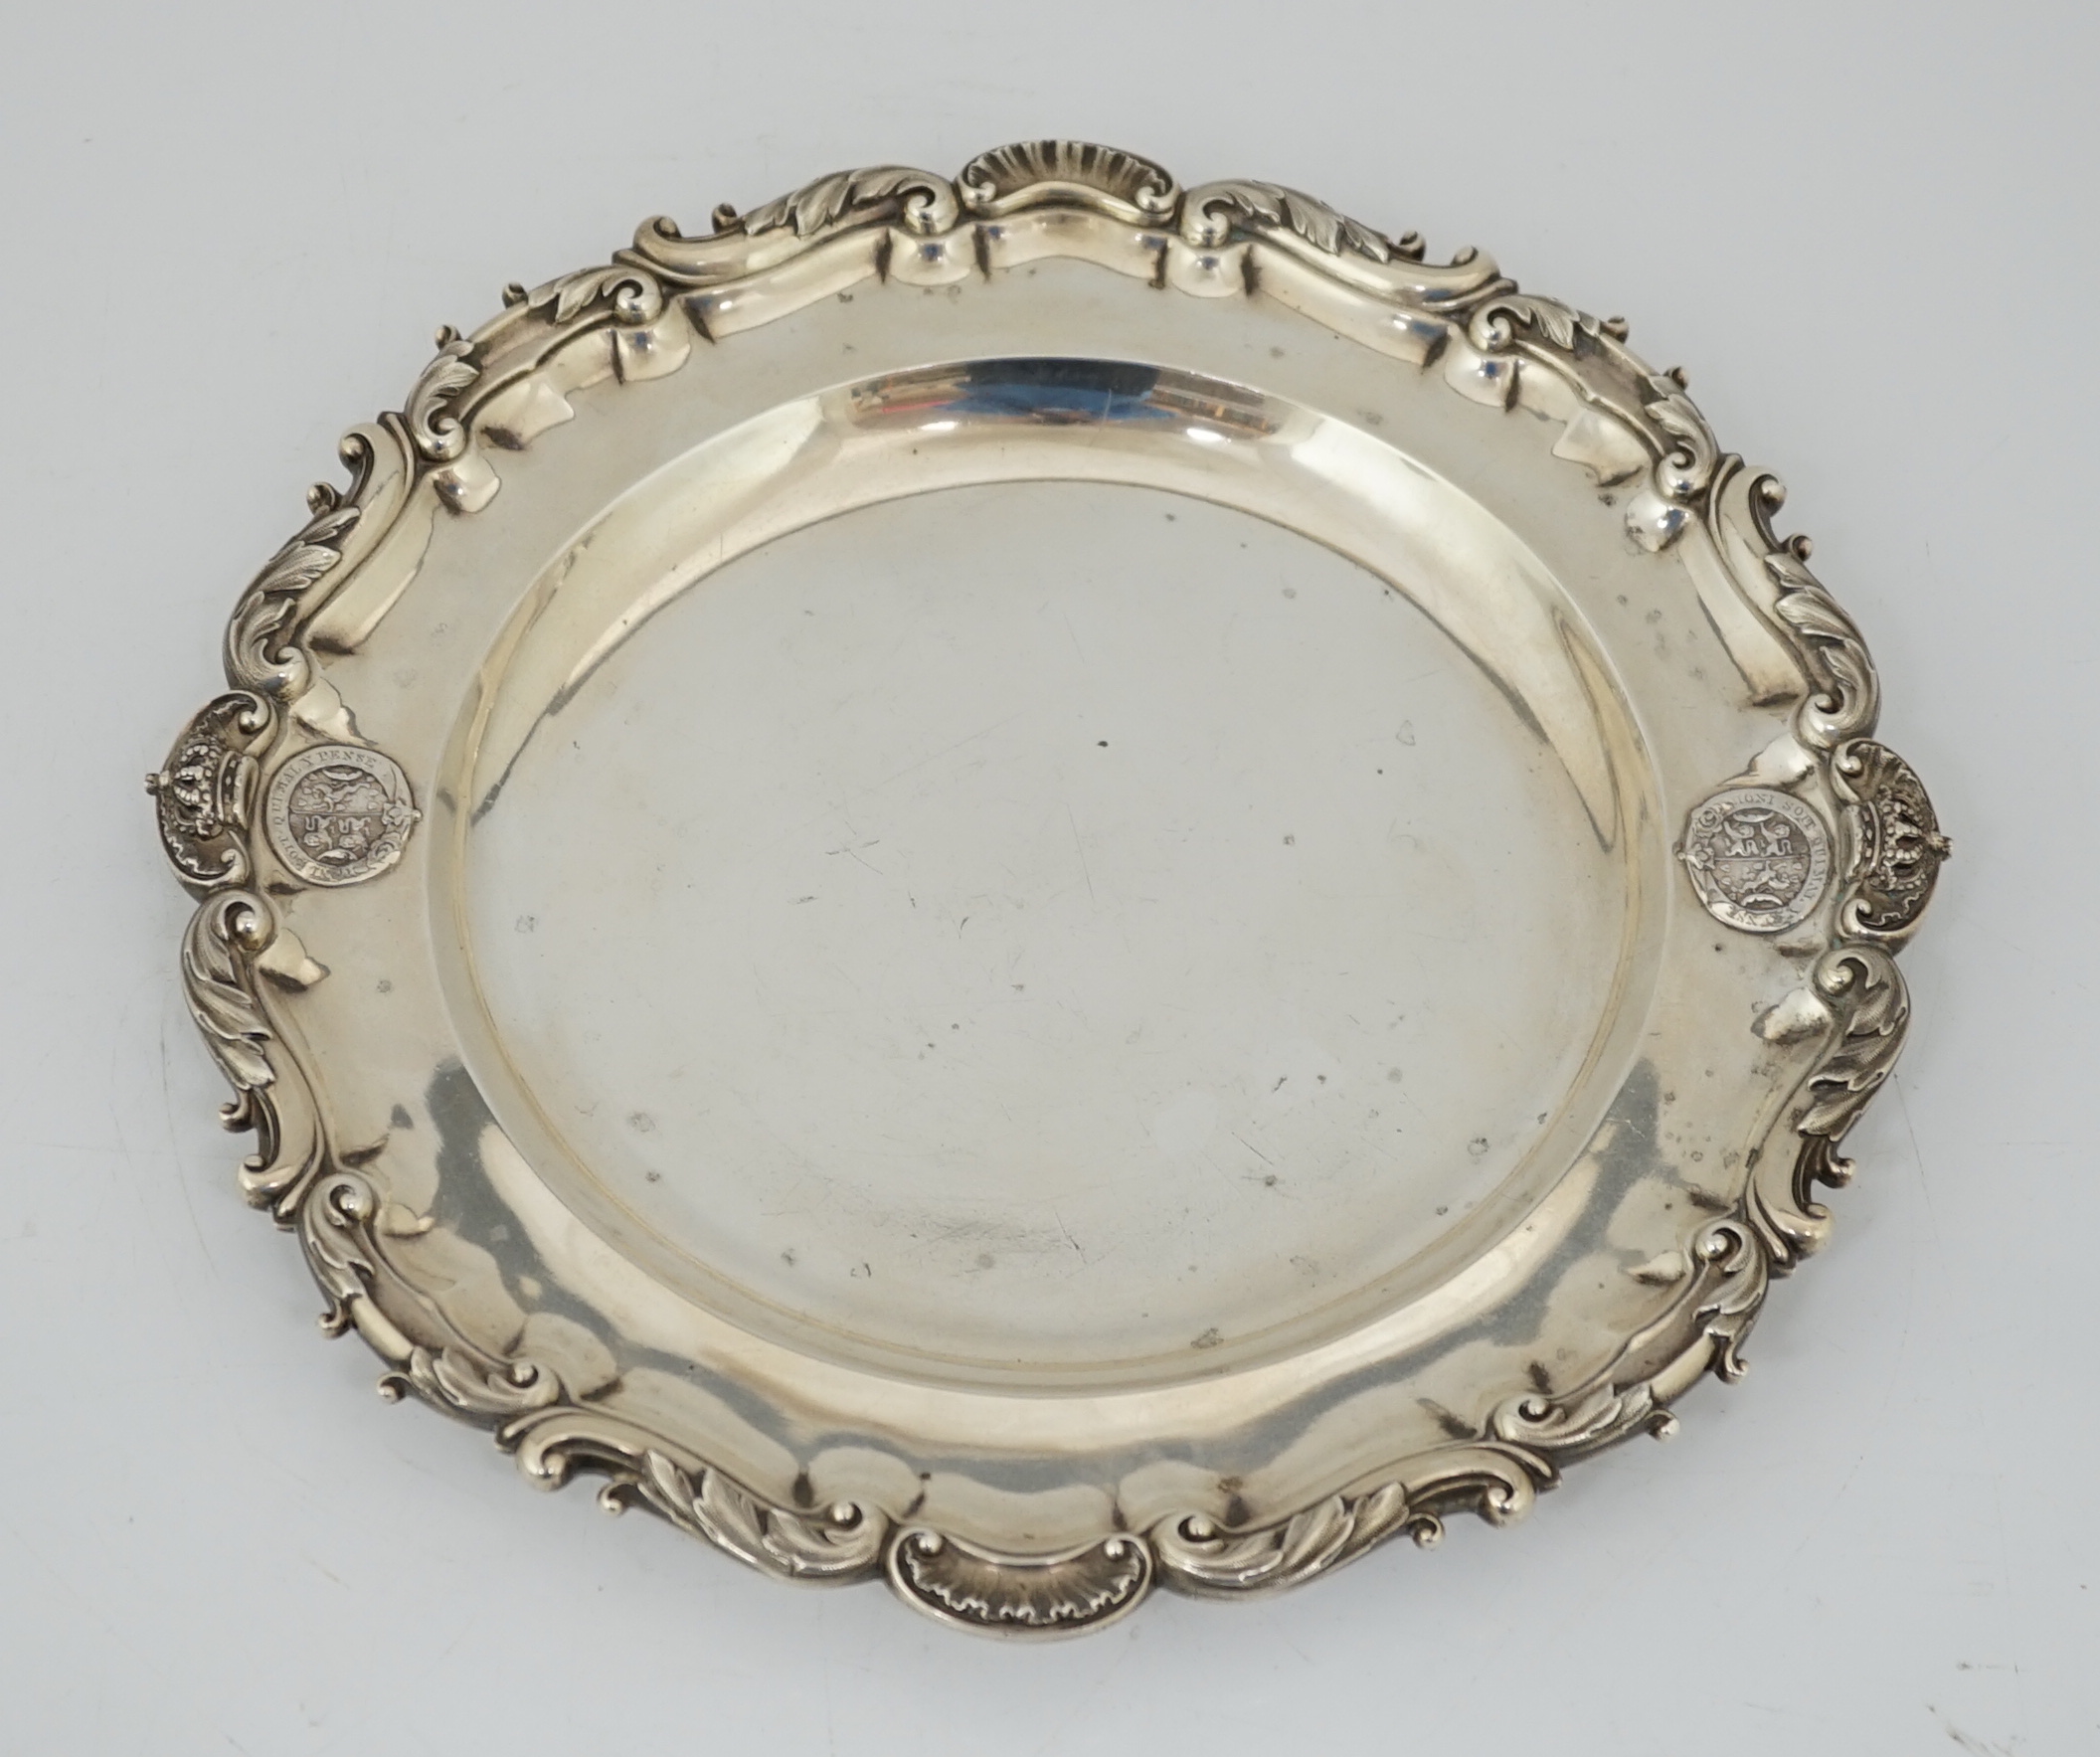 Duke of Brunswick service: An early Victorian silver serving plate by John Mortimer & John Samuel Hunt